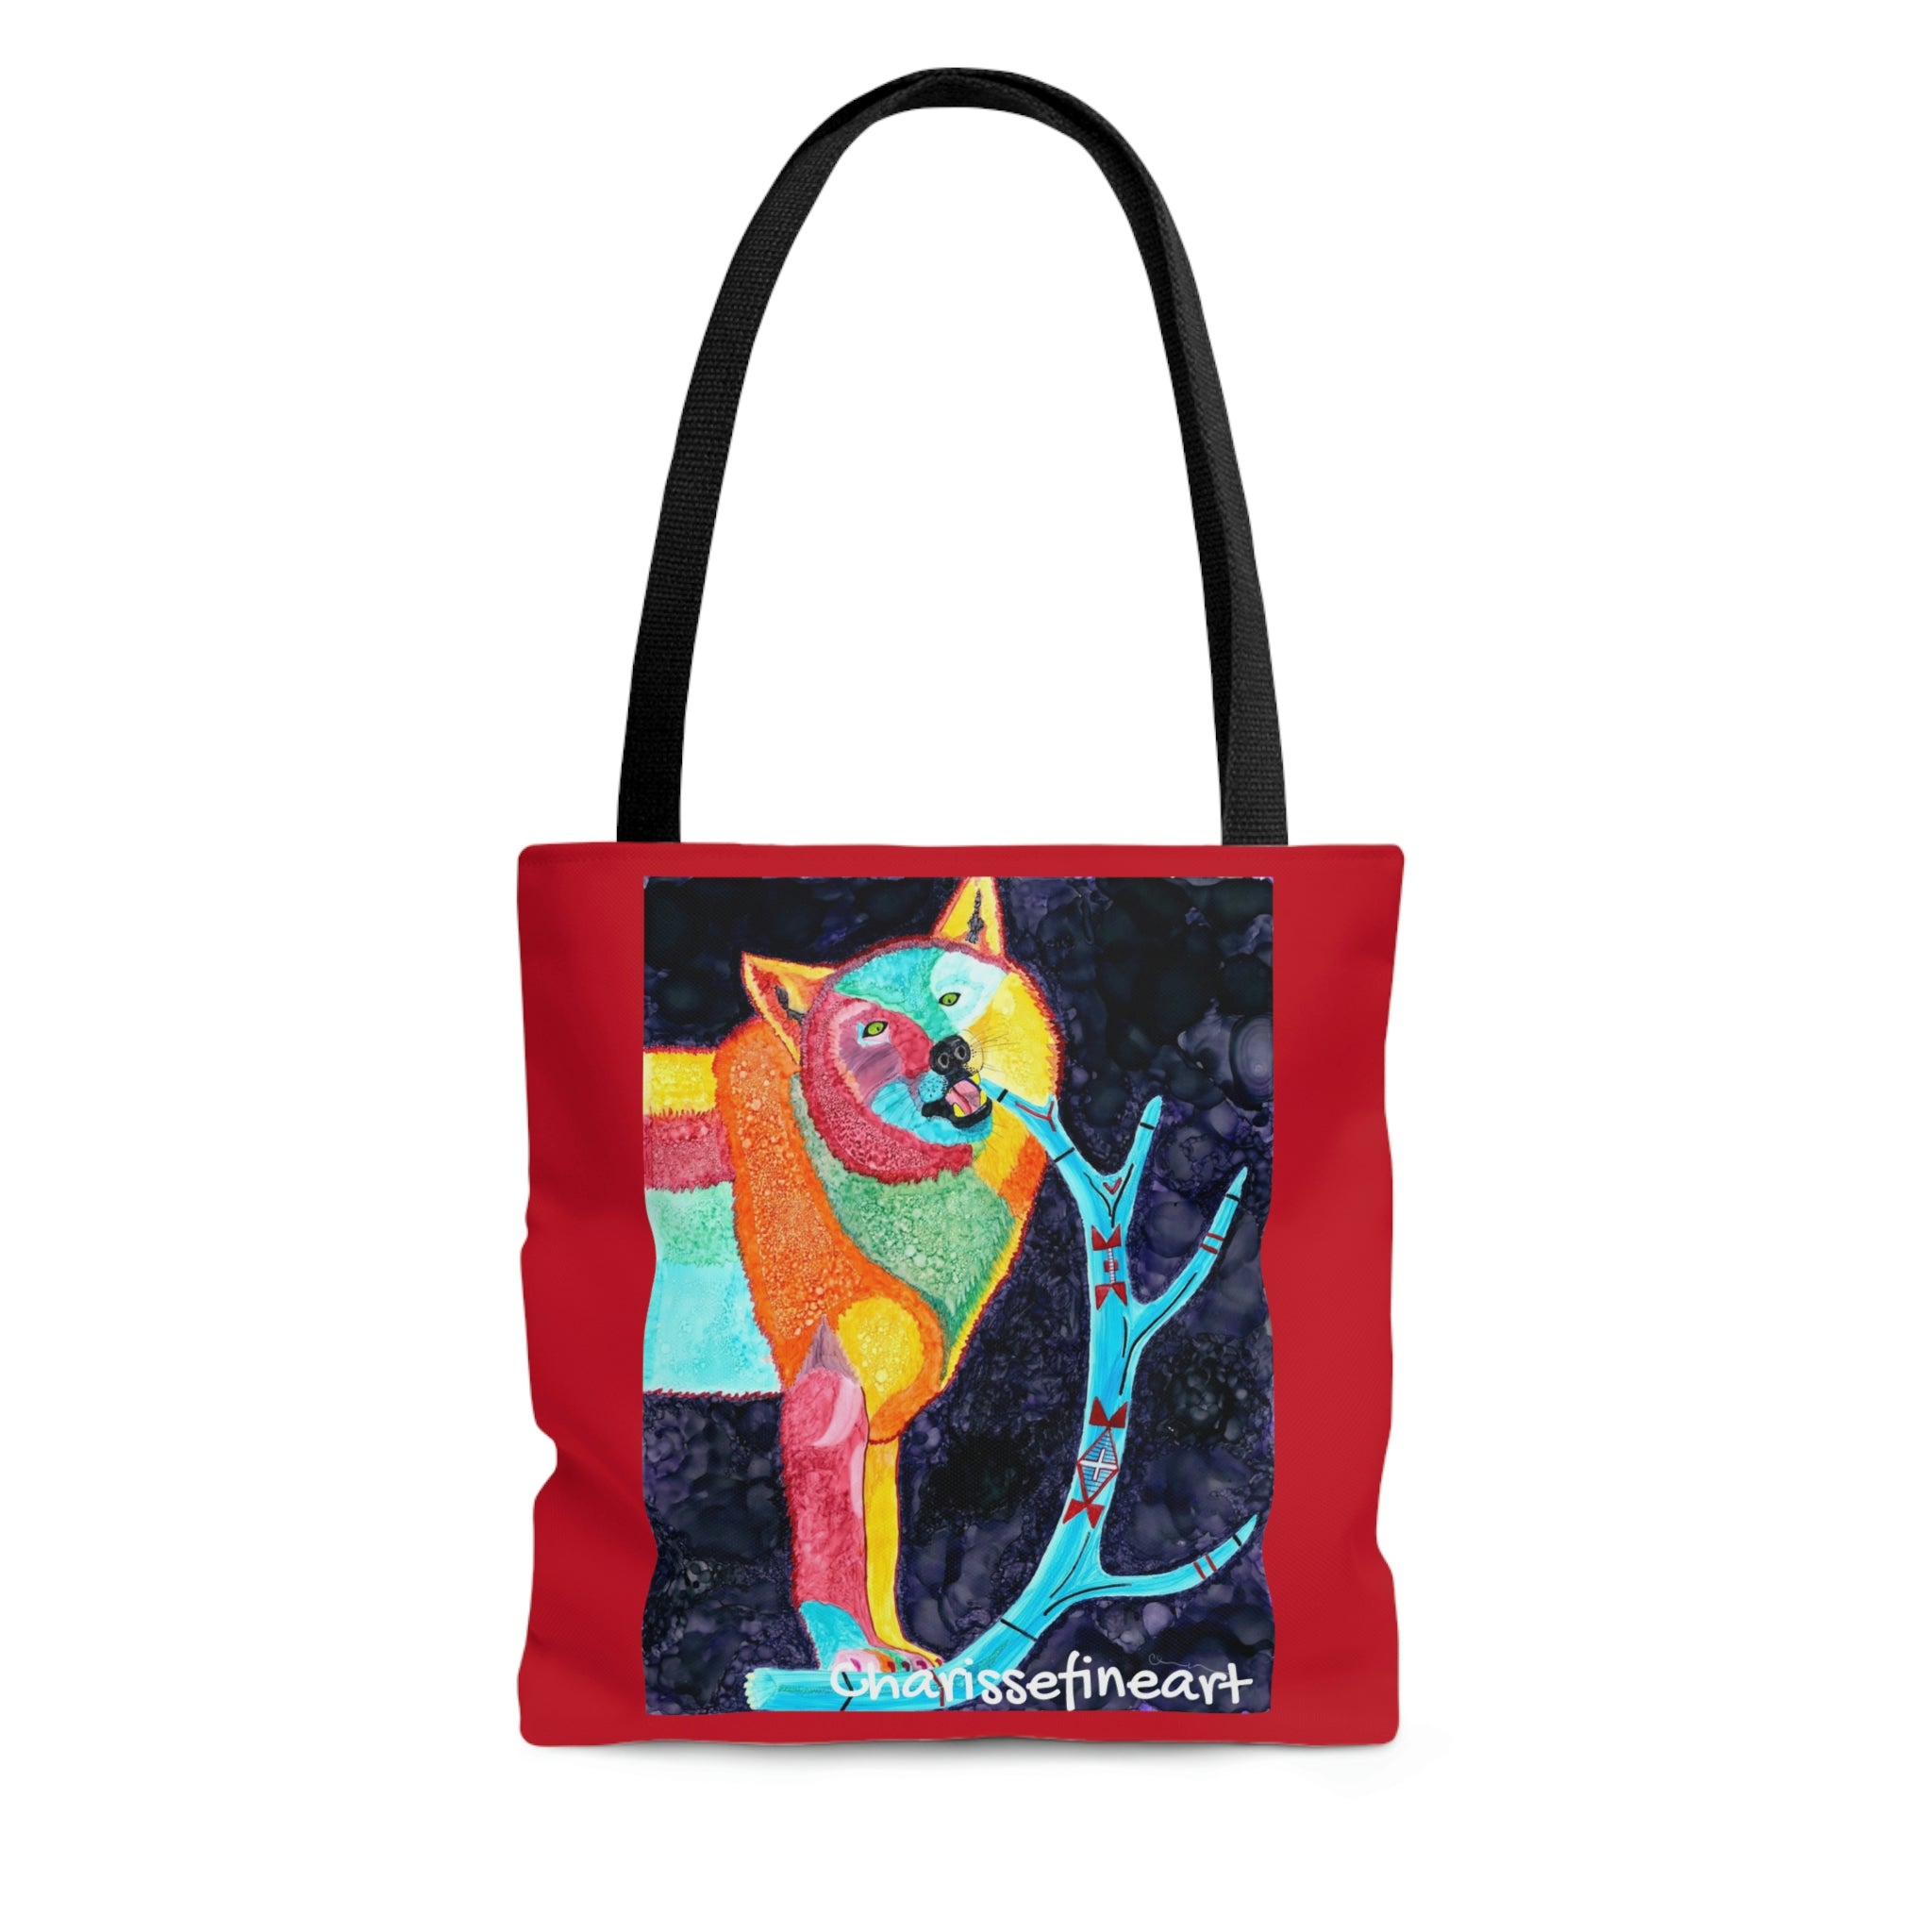 "Shunkaha" Wolf Tote Bag